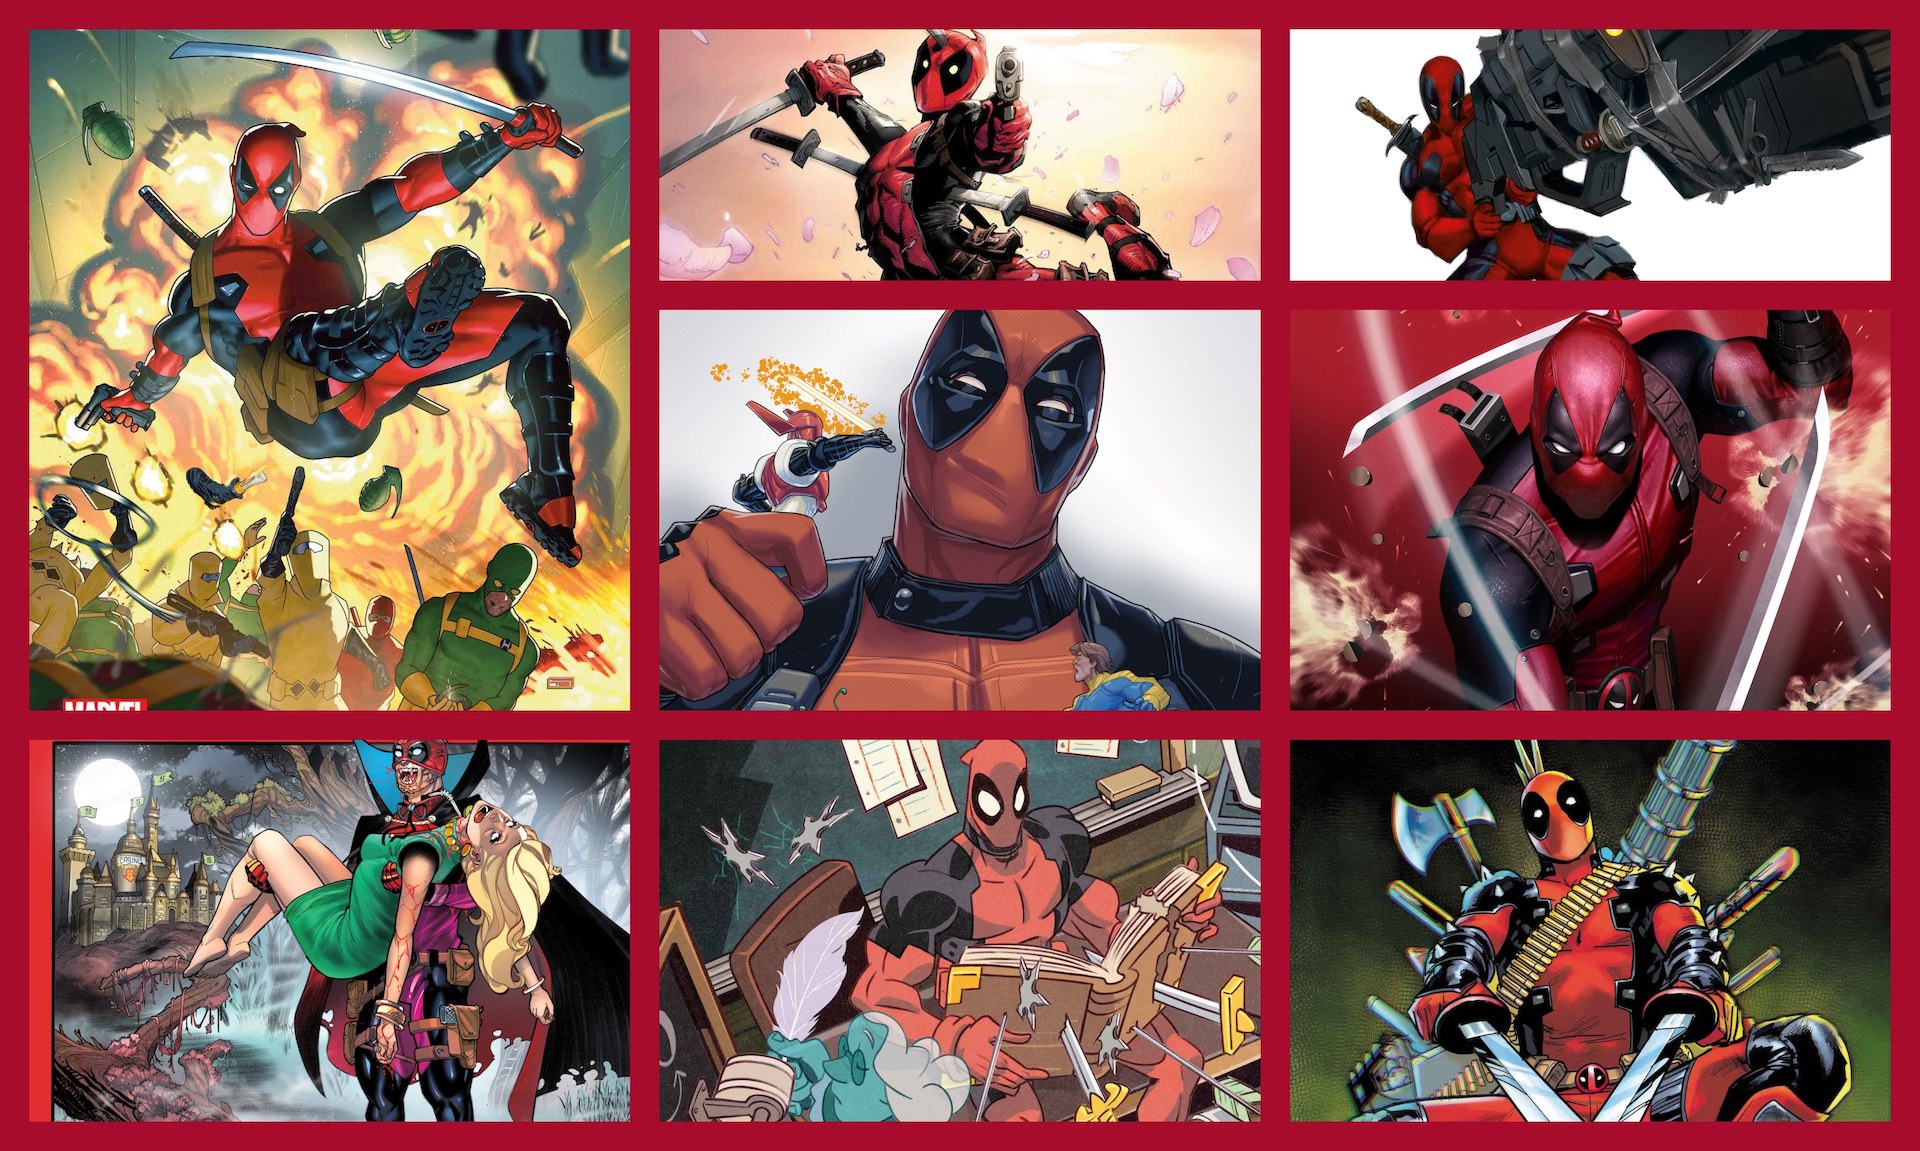 Marvel unleashed 'Deadpool' #1 variant covers